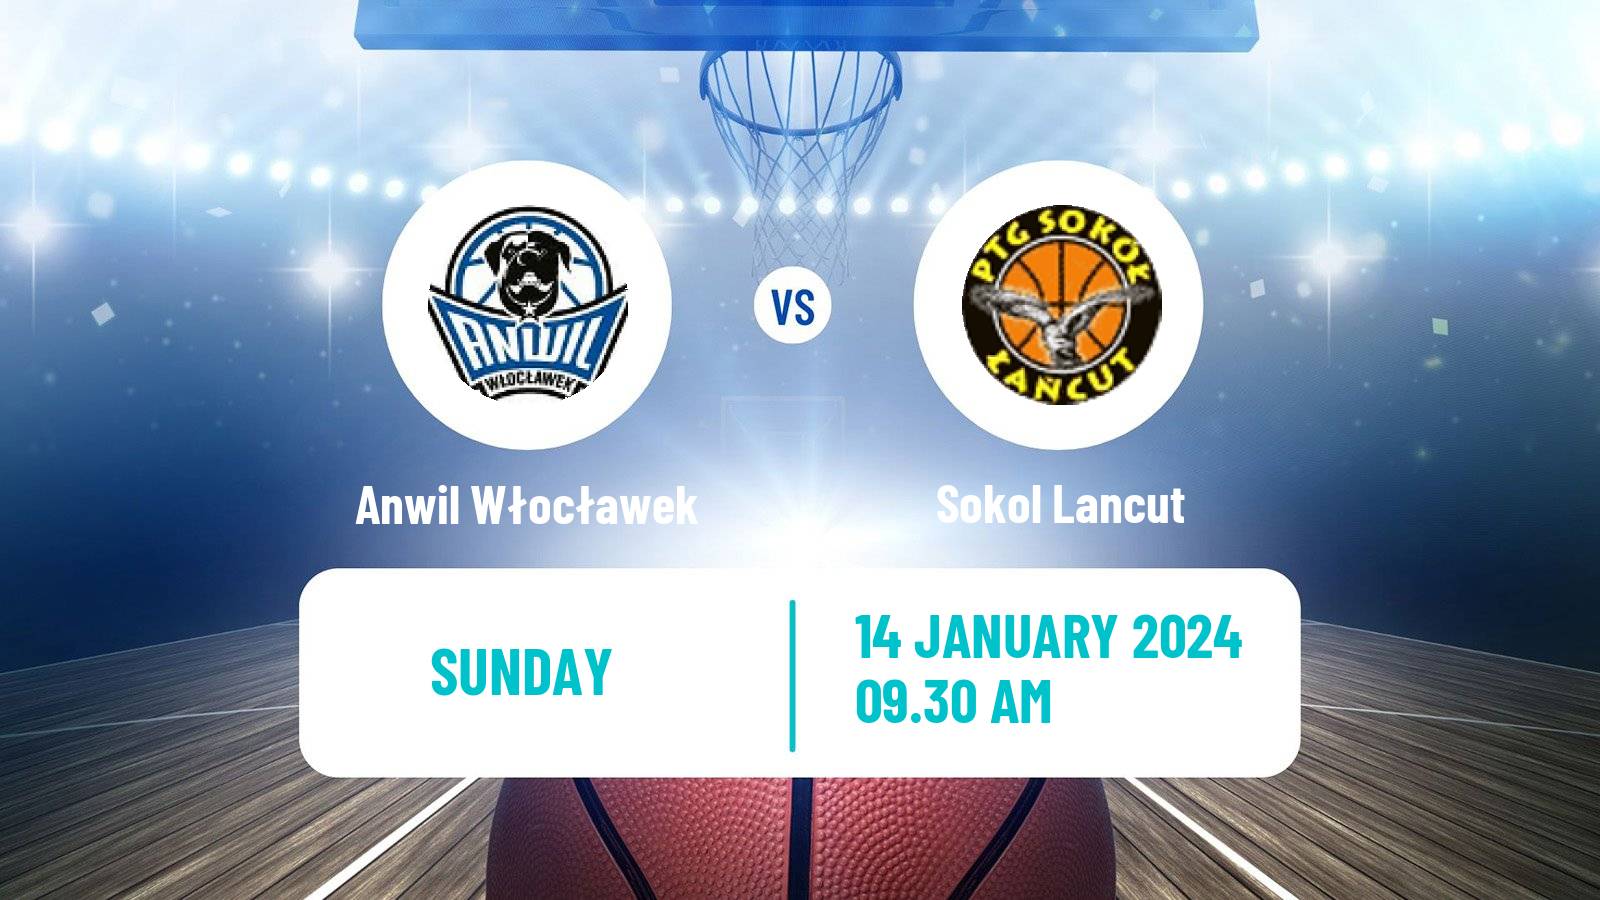 Basketball Polish Basket Liga Anwil Włocławek - Sokol Lancut